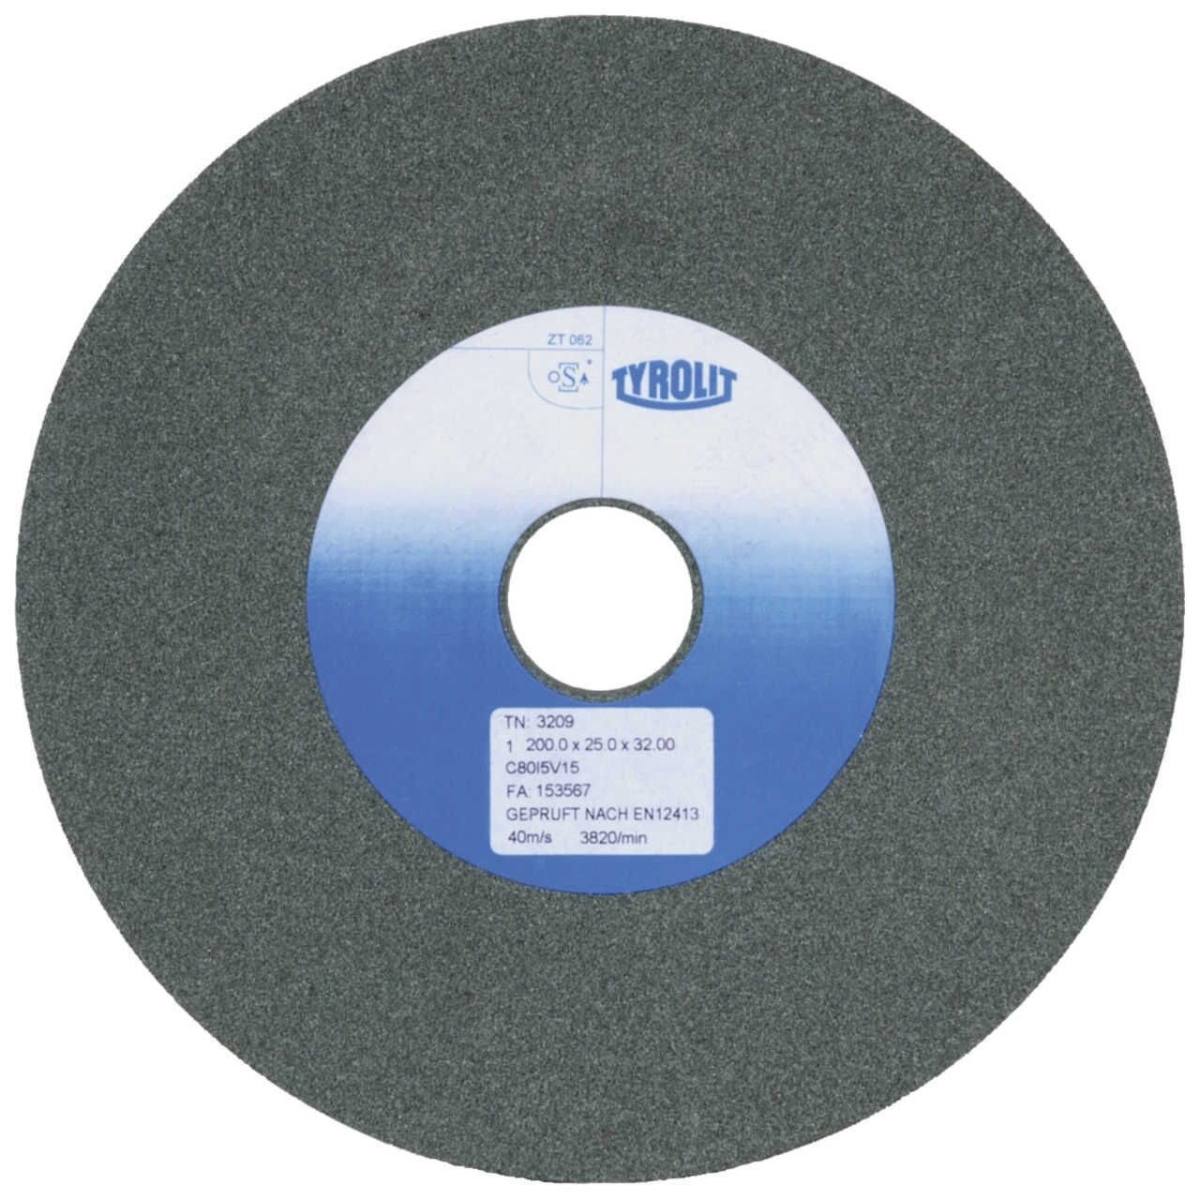 TYROLIT discos de desbaste cerámicos convencionales DxDxH 175x25x51 Para metales no férricos, forma: 1, Art. 34287487